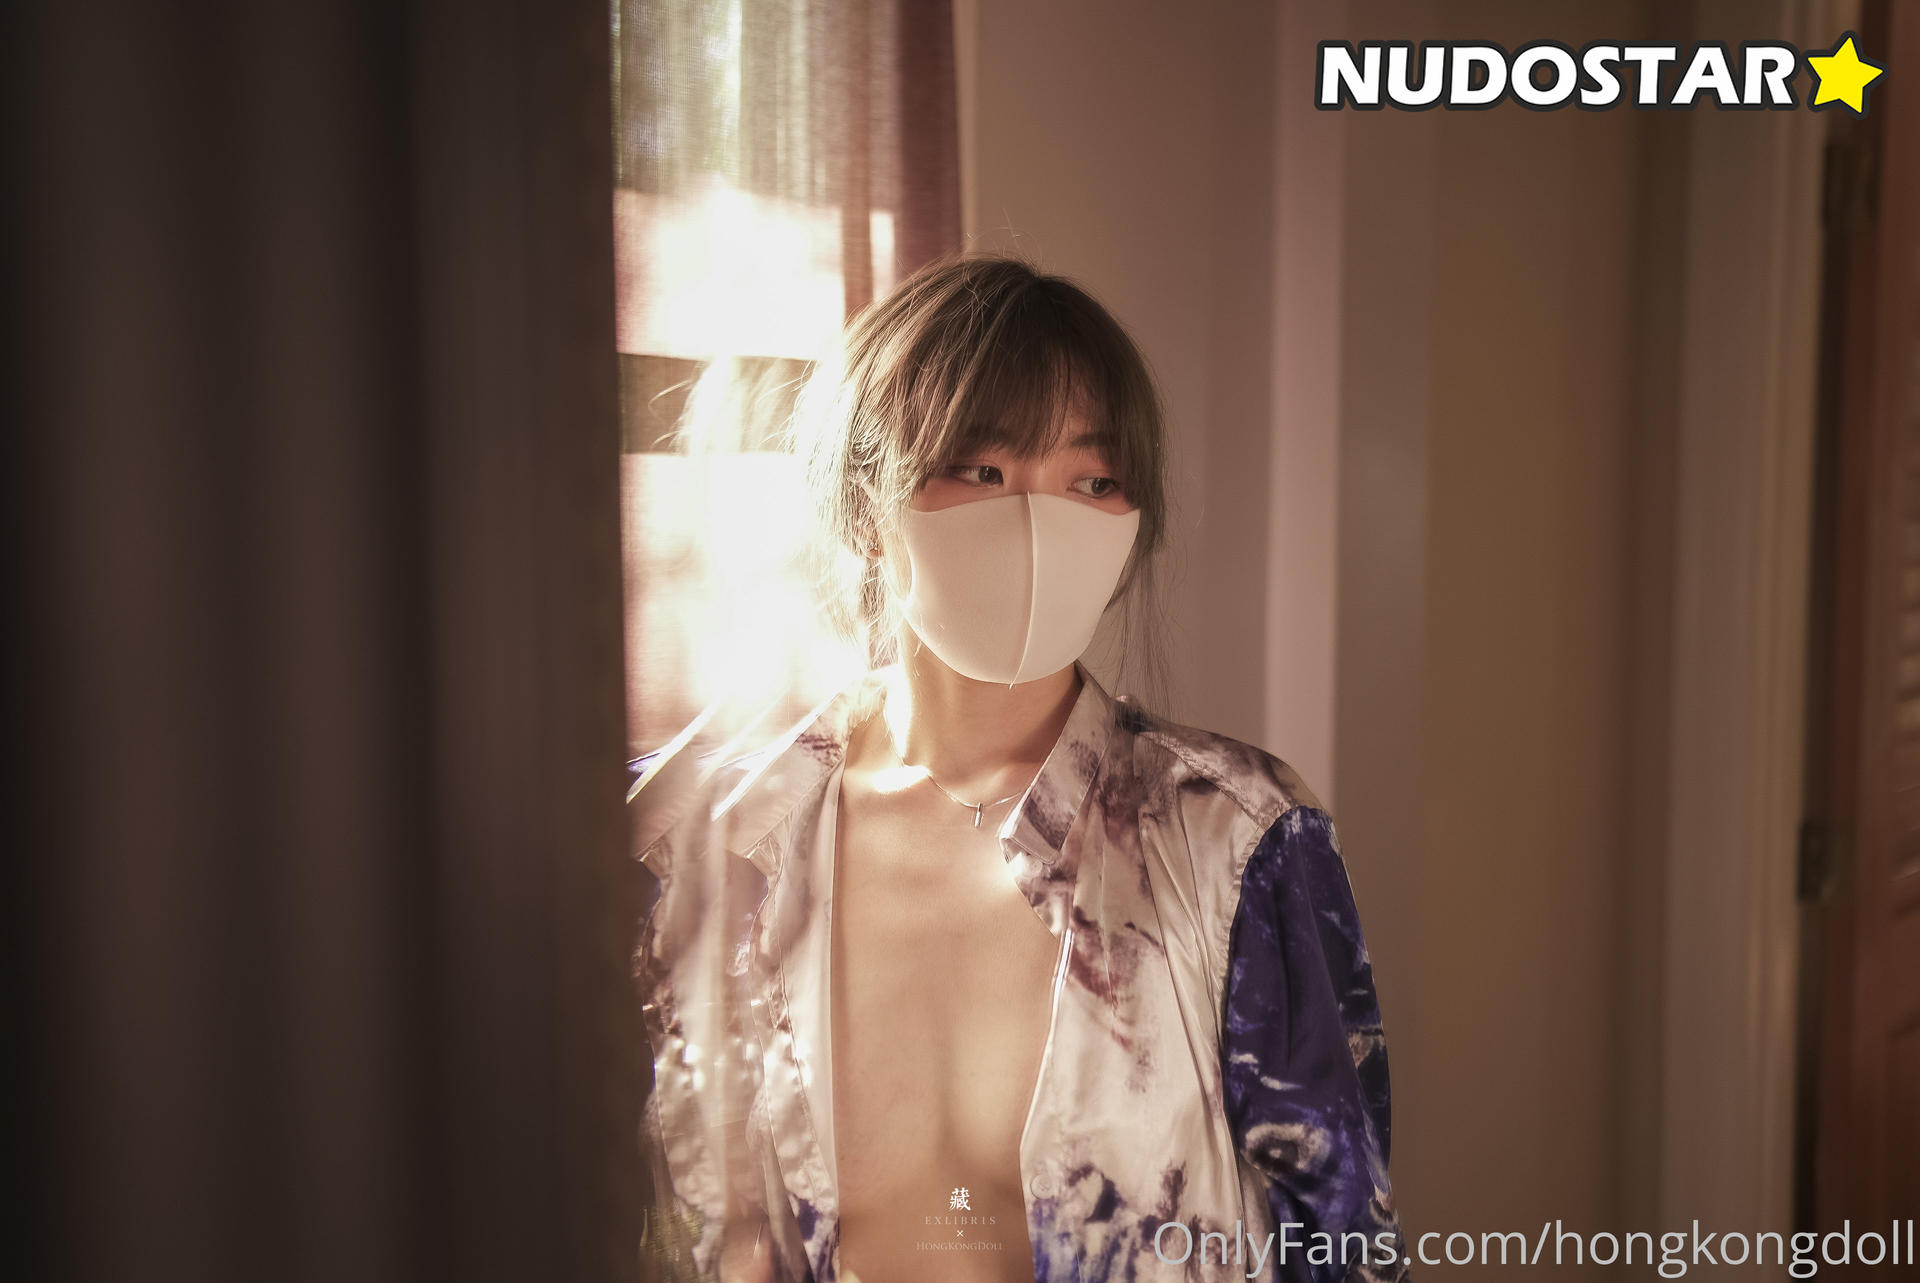 Hongkongdoll Nude Leaks Nudostar.com 041